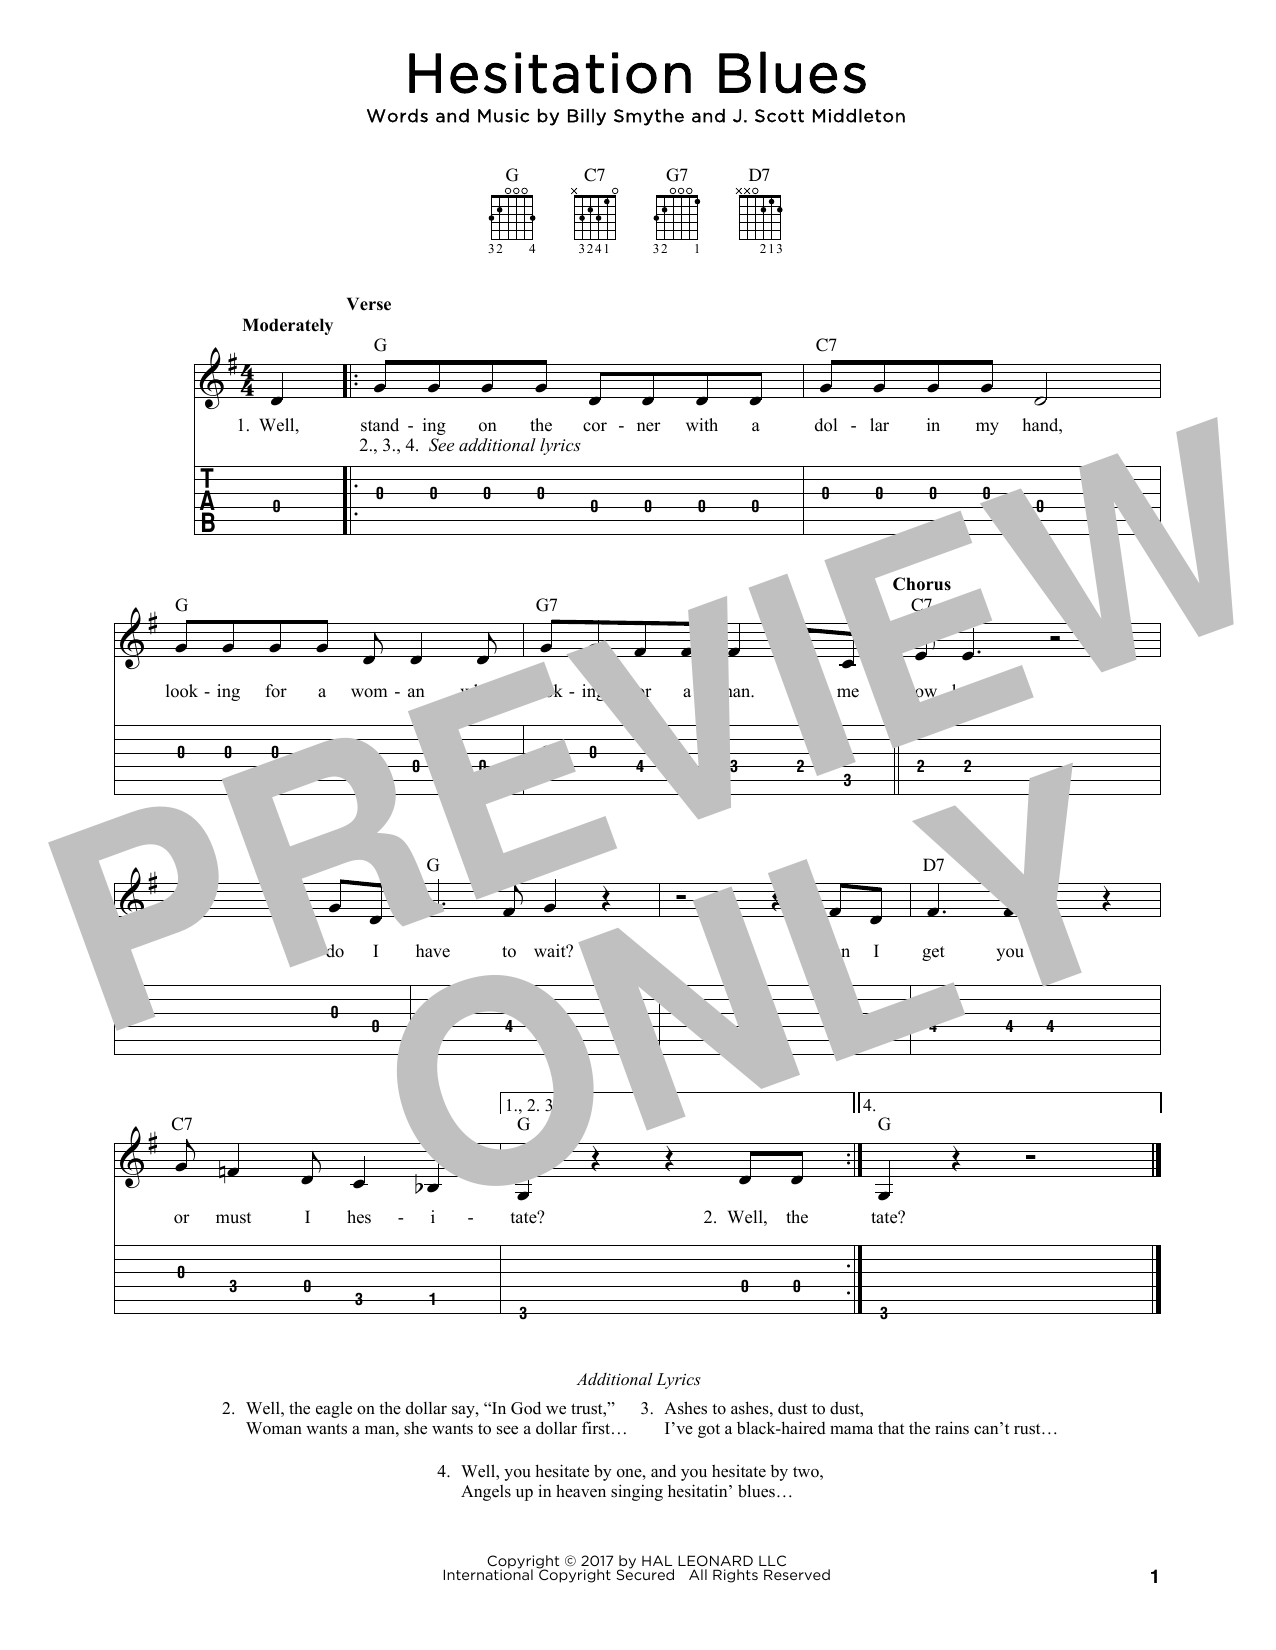 J. Scott Middleton Hesitation Blues Sheet Music Notes & Chords for Guitar Tab - Download or Print PDF